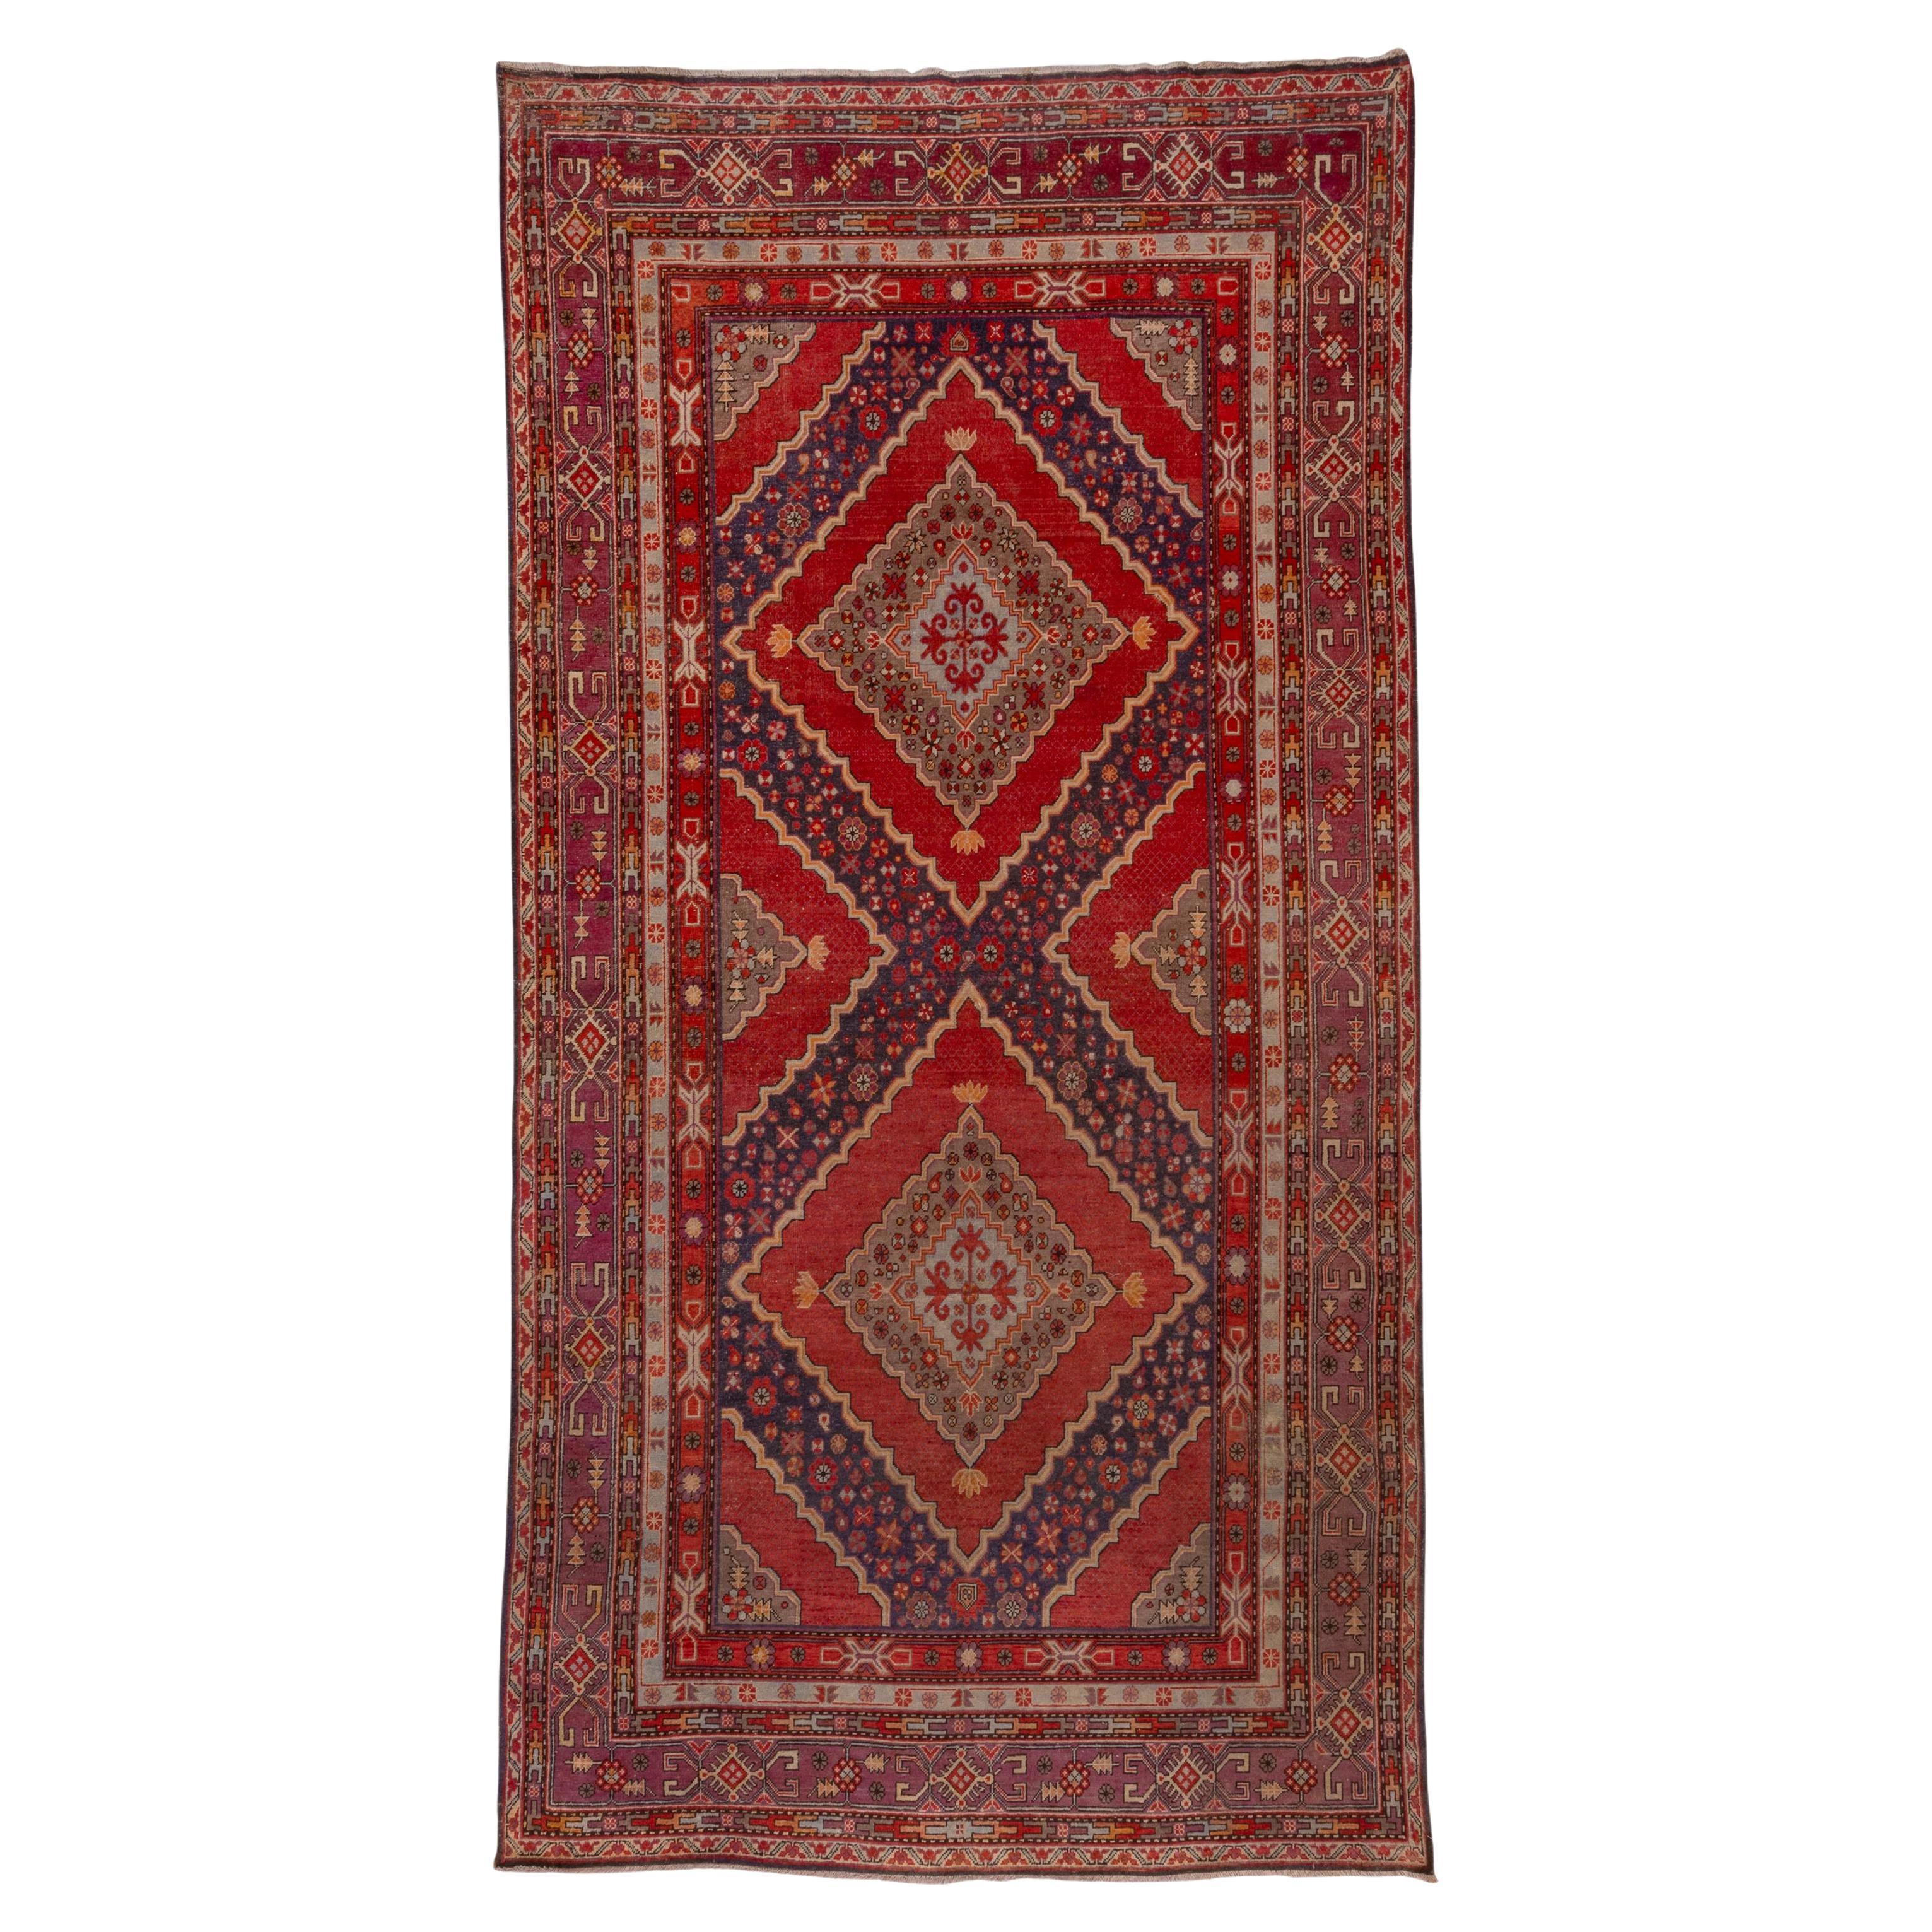 Antique Red Khotan Carpet, circa 1920s